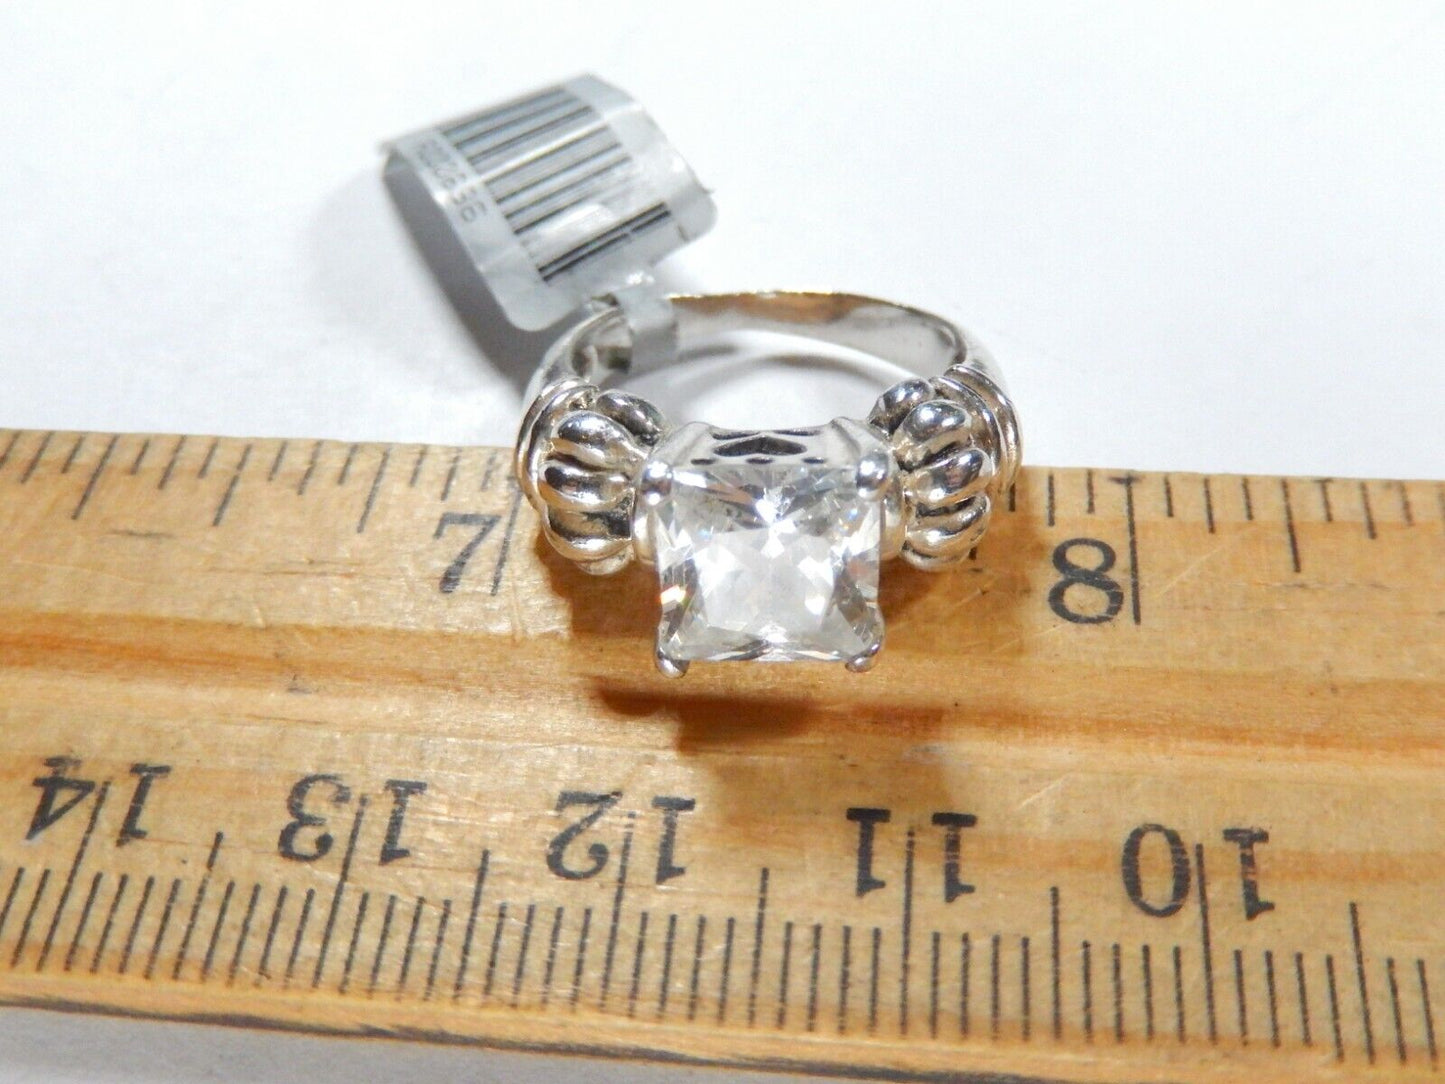 *VINTAGE*  3.00 CT Princess Cut CZ Sterling Silver Wedding Engagement Ring Sz 6